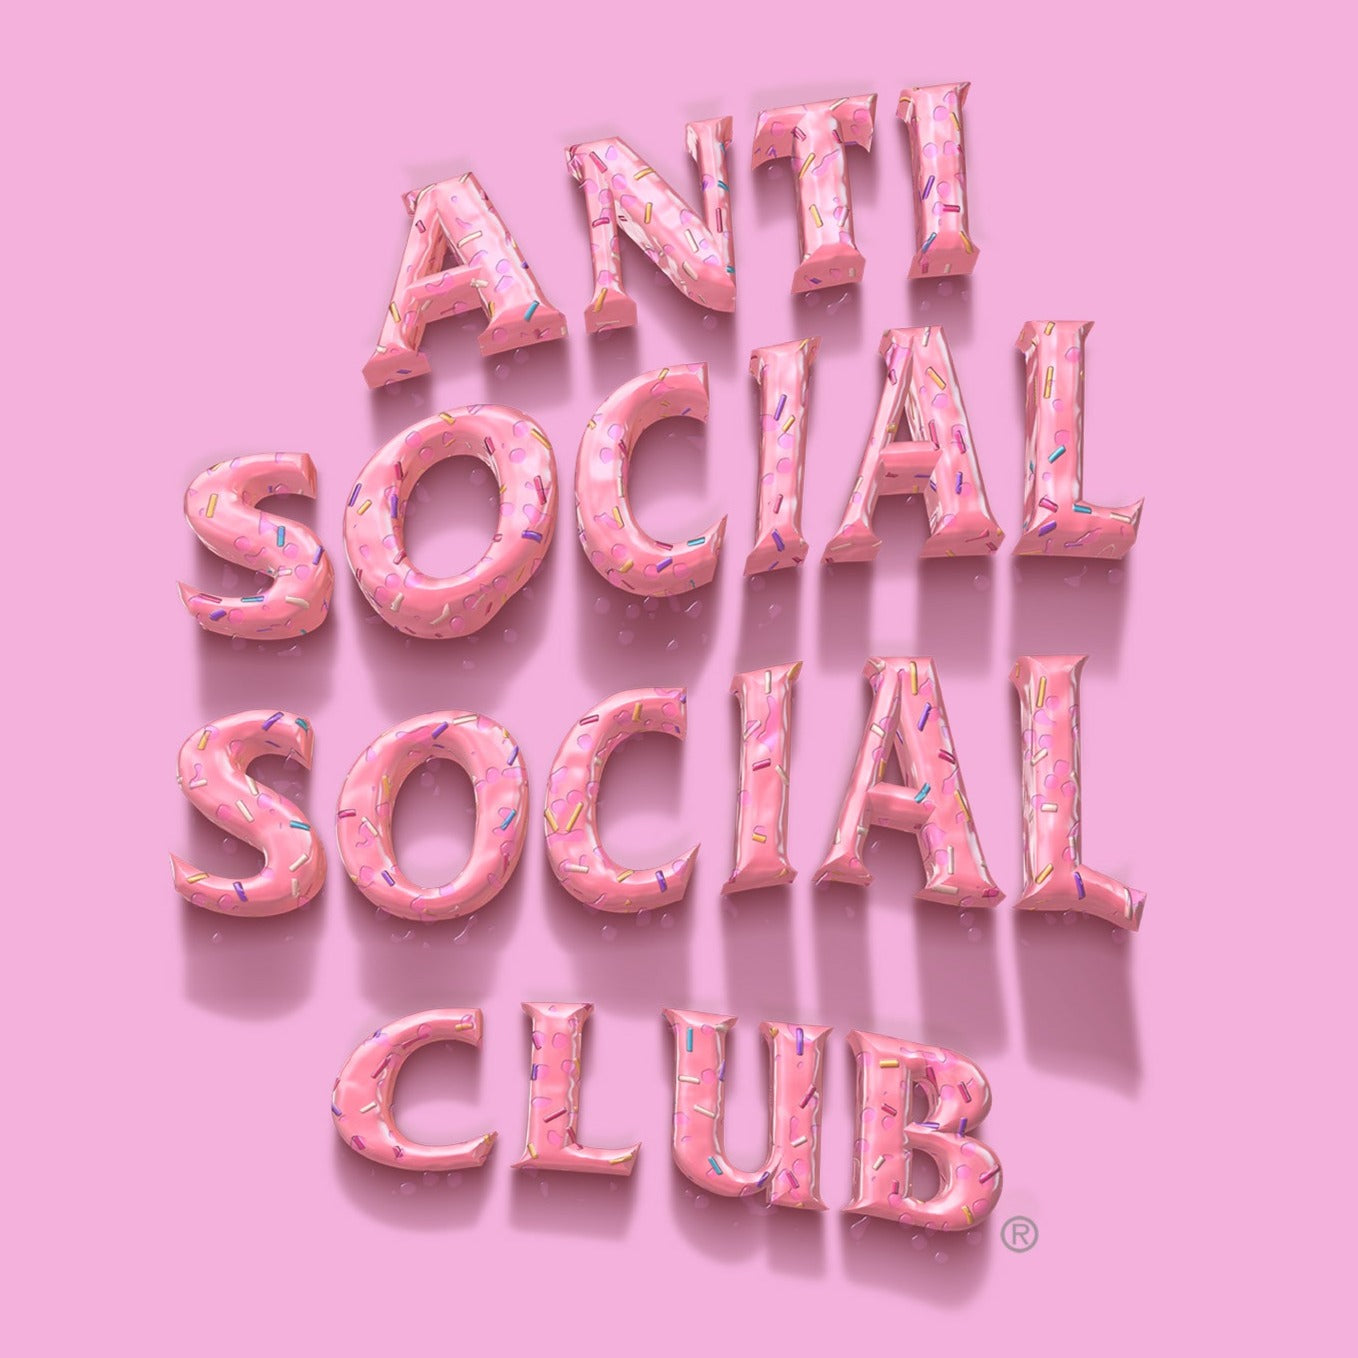 Sprinkling Tears Pink Shirt Anti Social Social Club